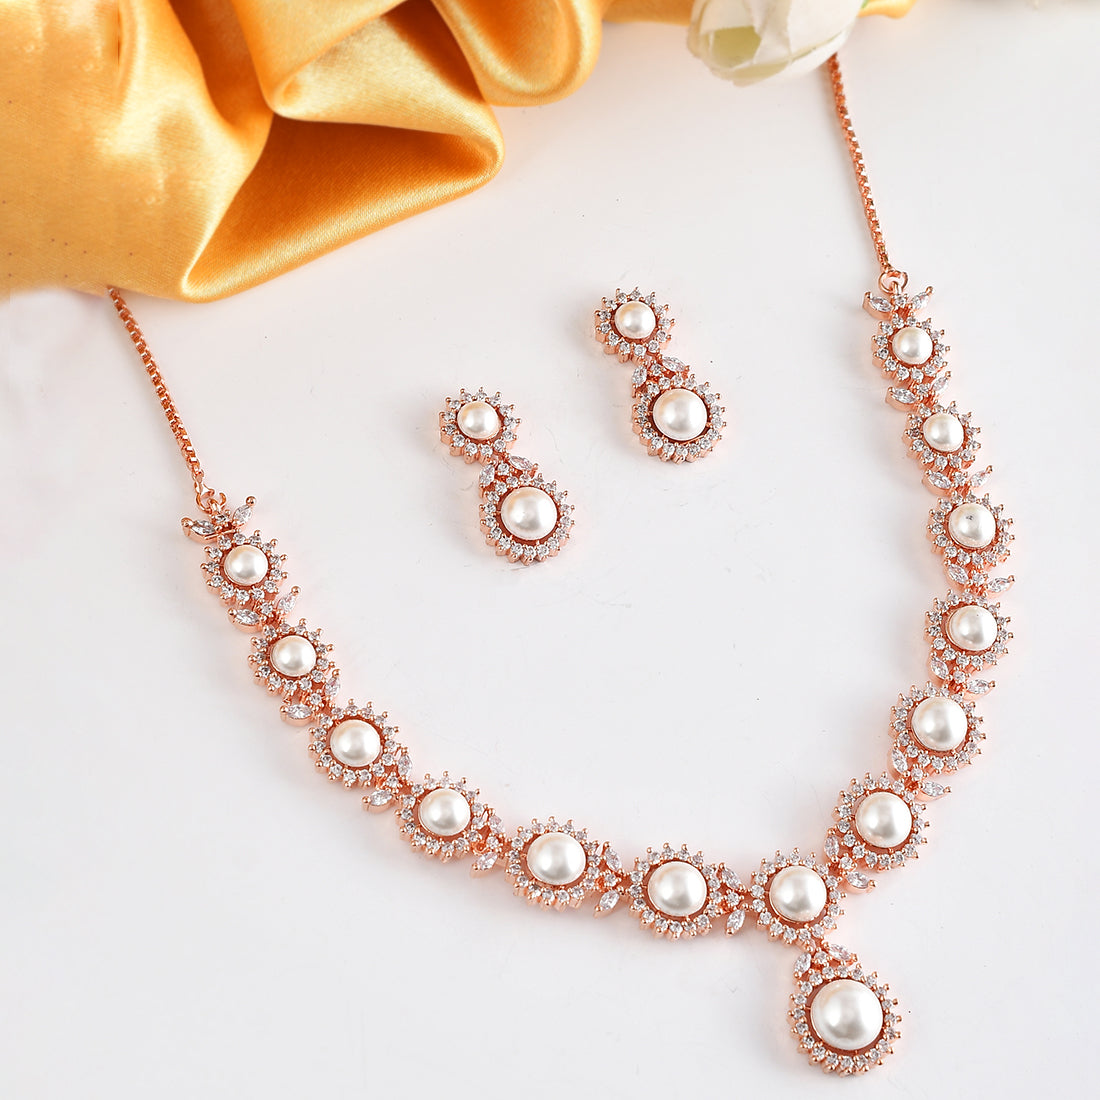 Rose Quartz, Ruby & Pearl Necklace - Modi Pearls